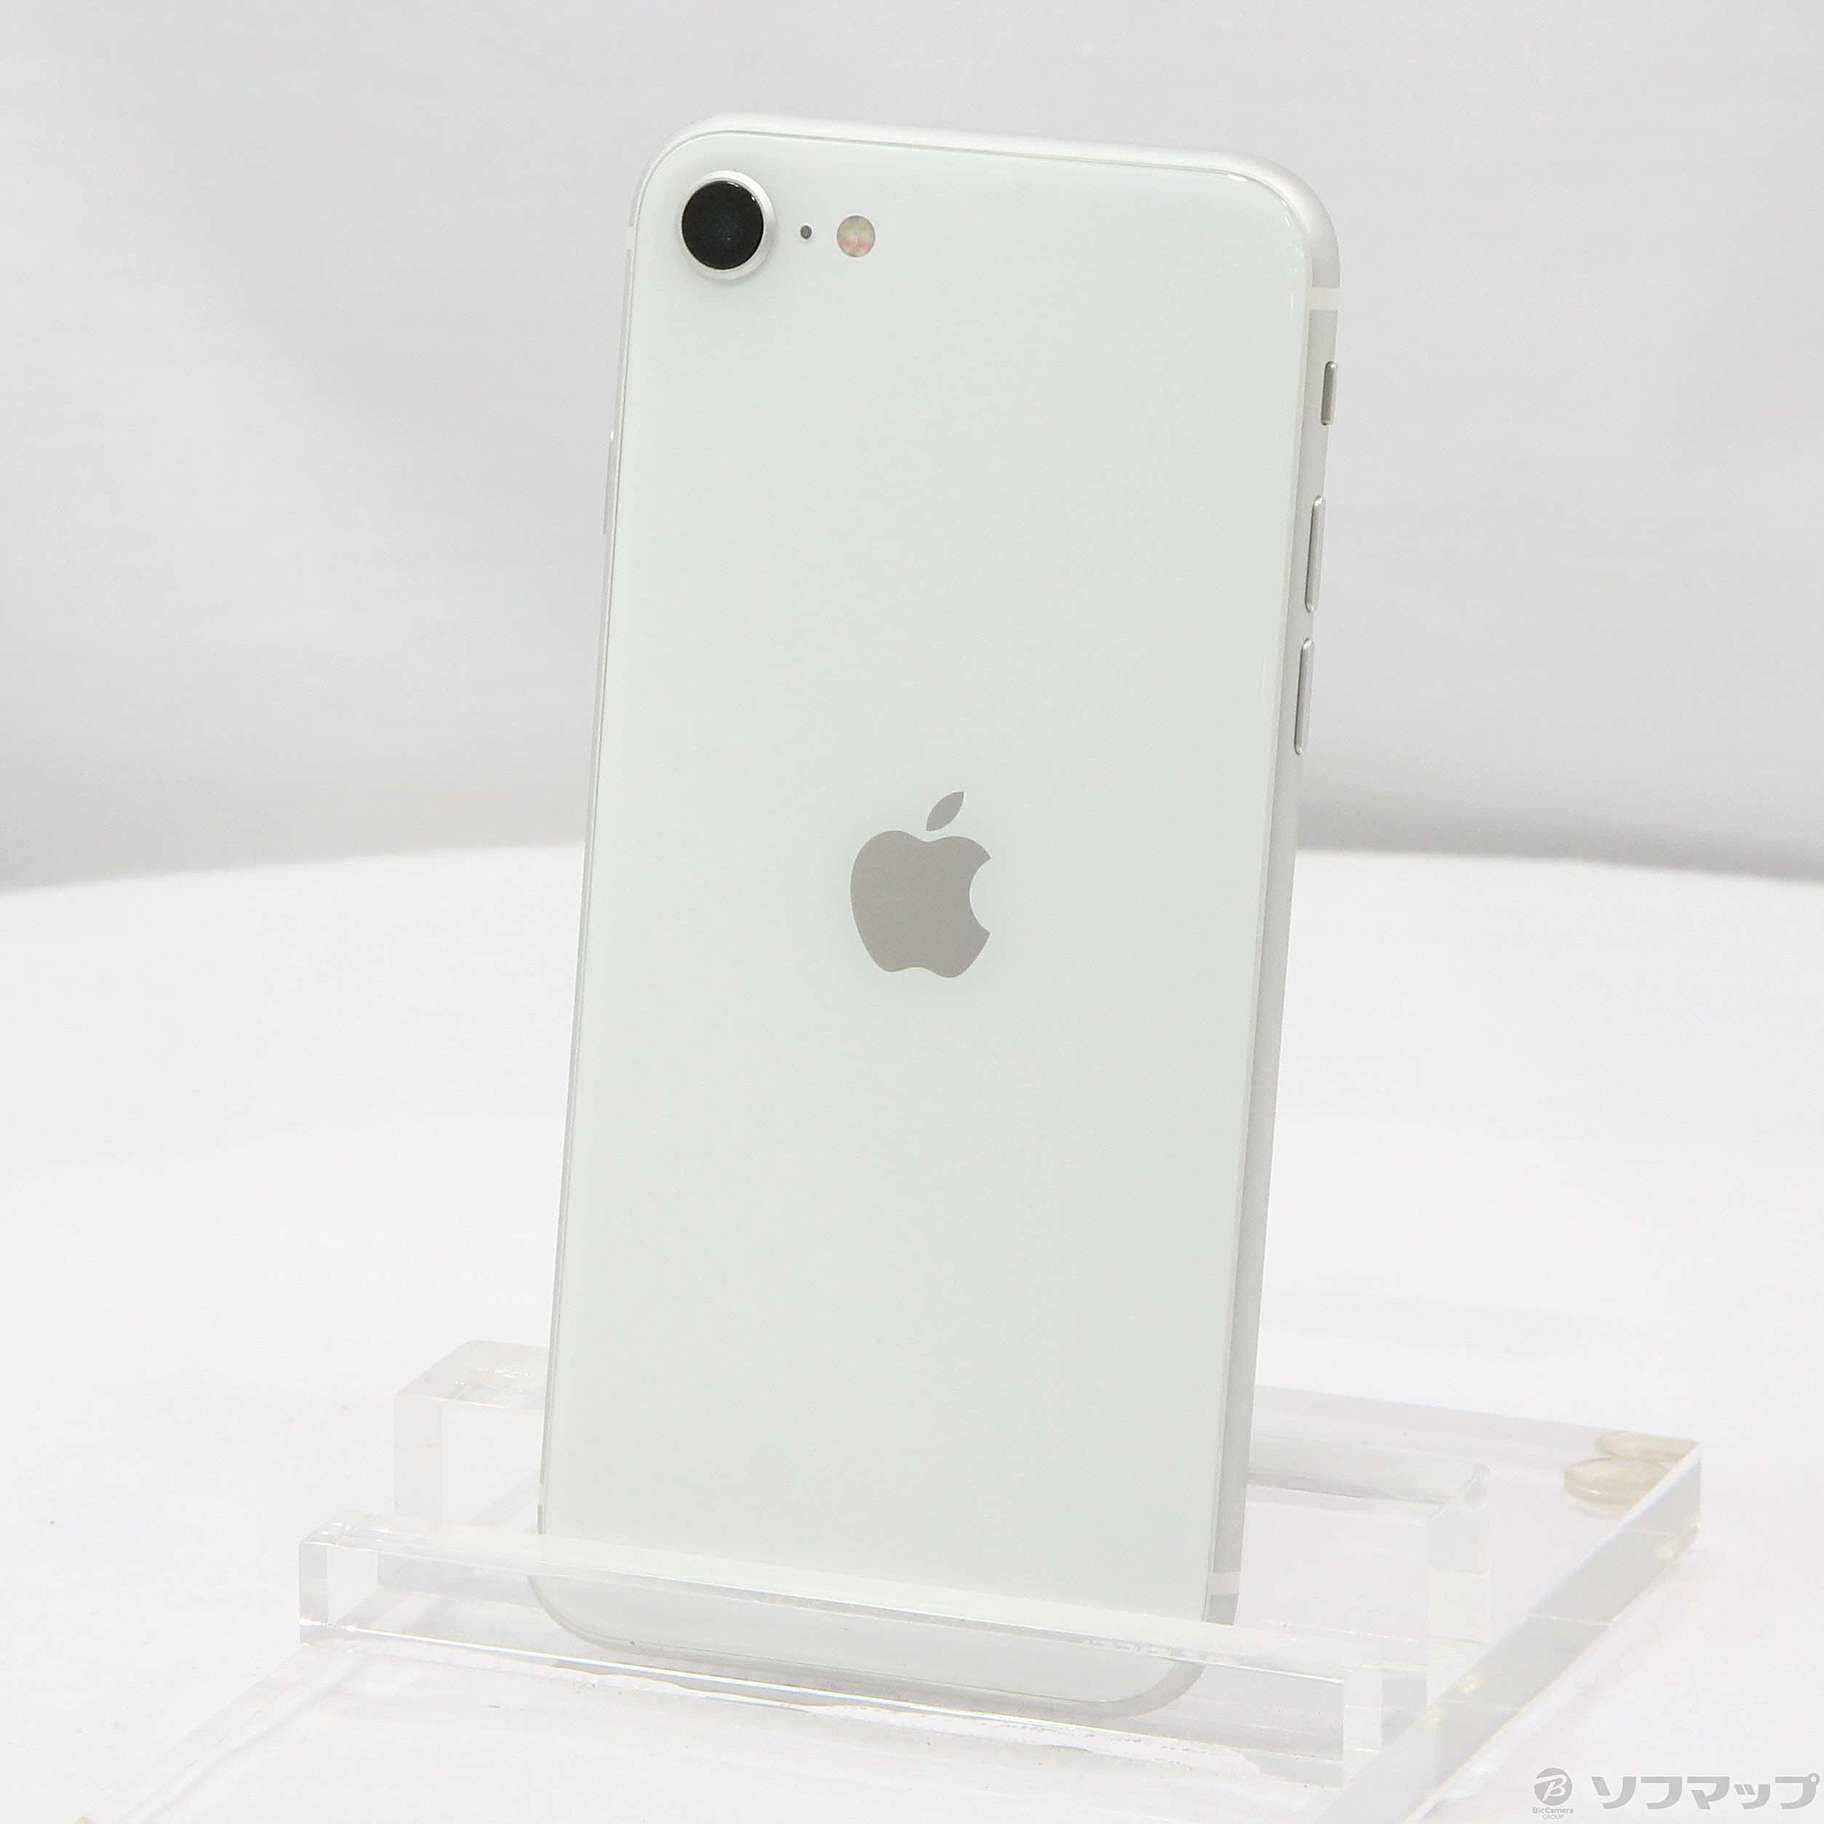 iPhone SE (第2世代) 64GB SIMフリー 中古(白ロム)価格比較